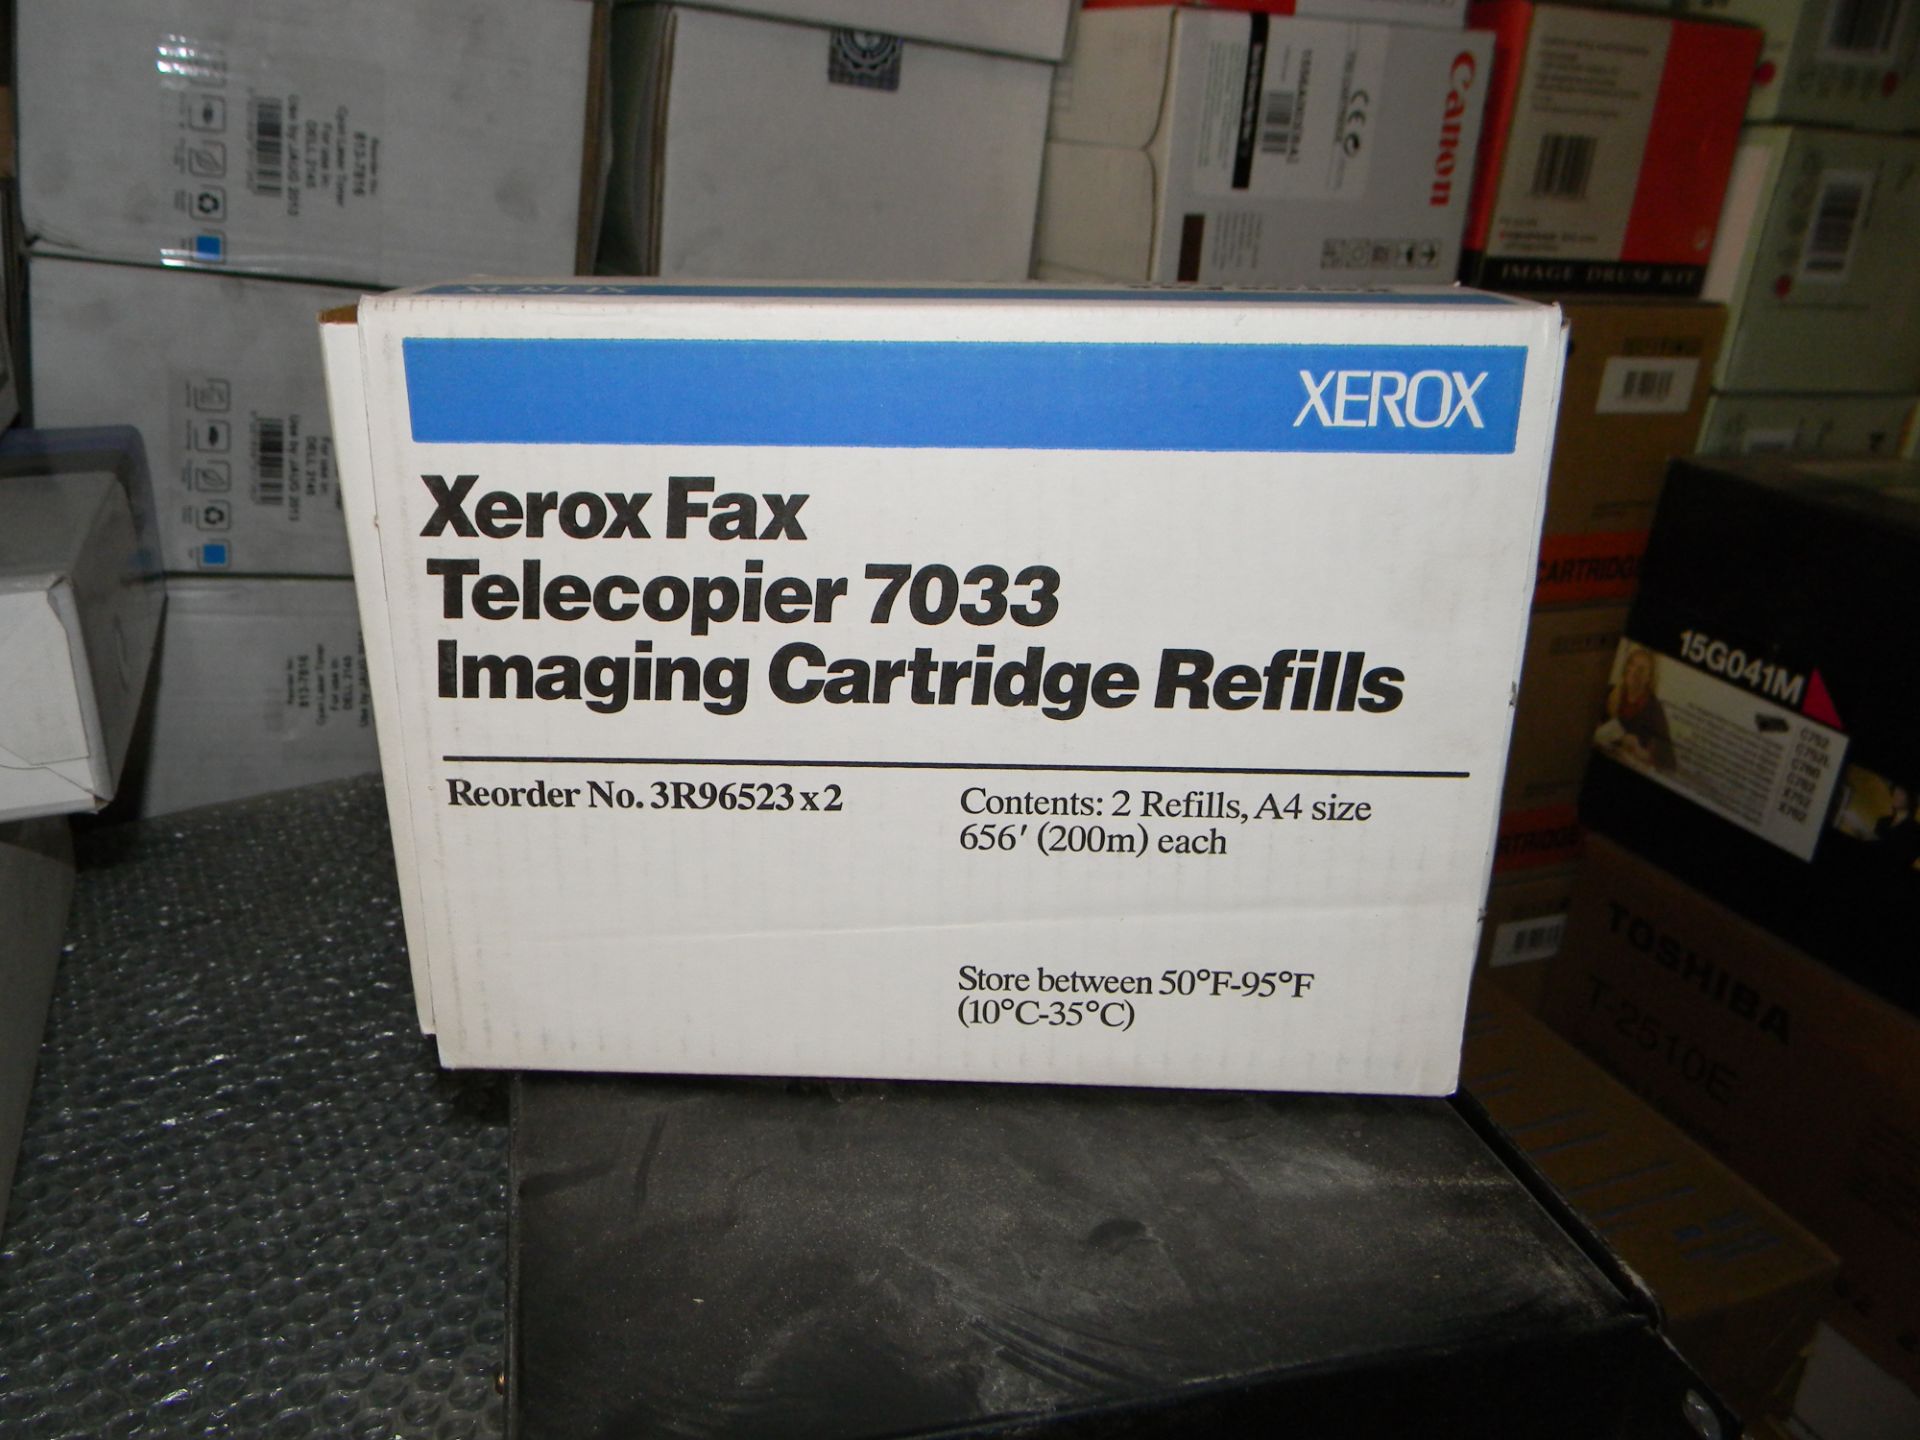 Xerox Imagings Cartridge refills